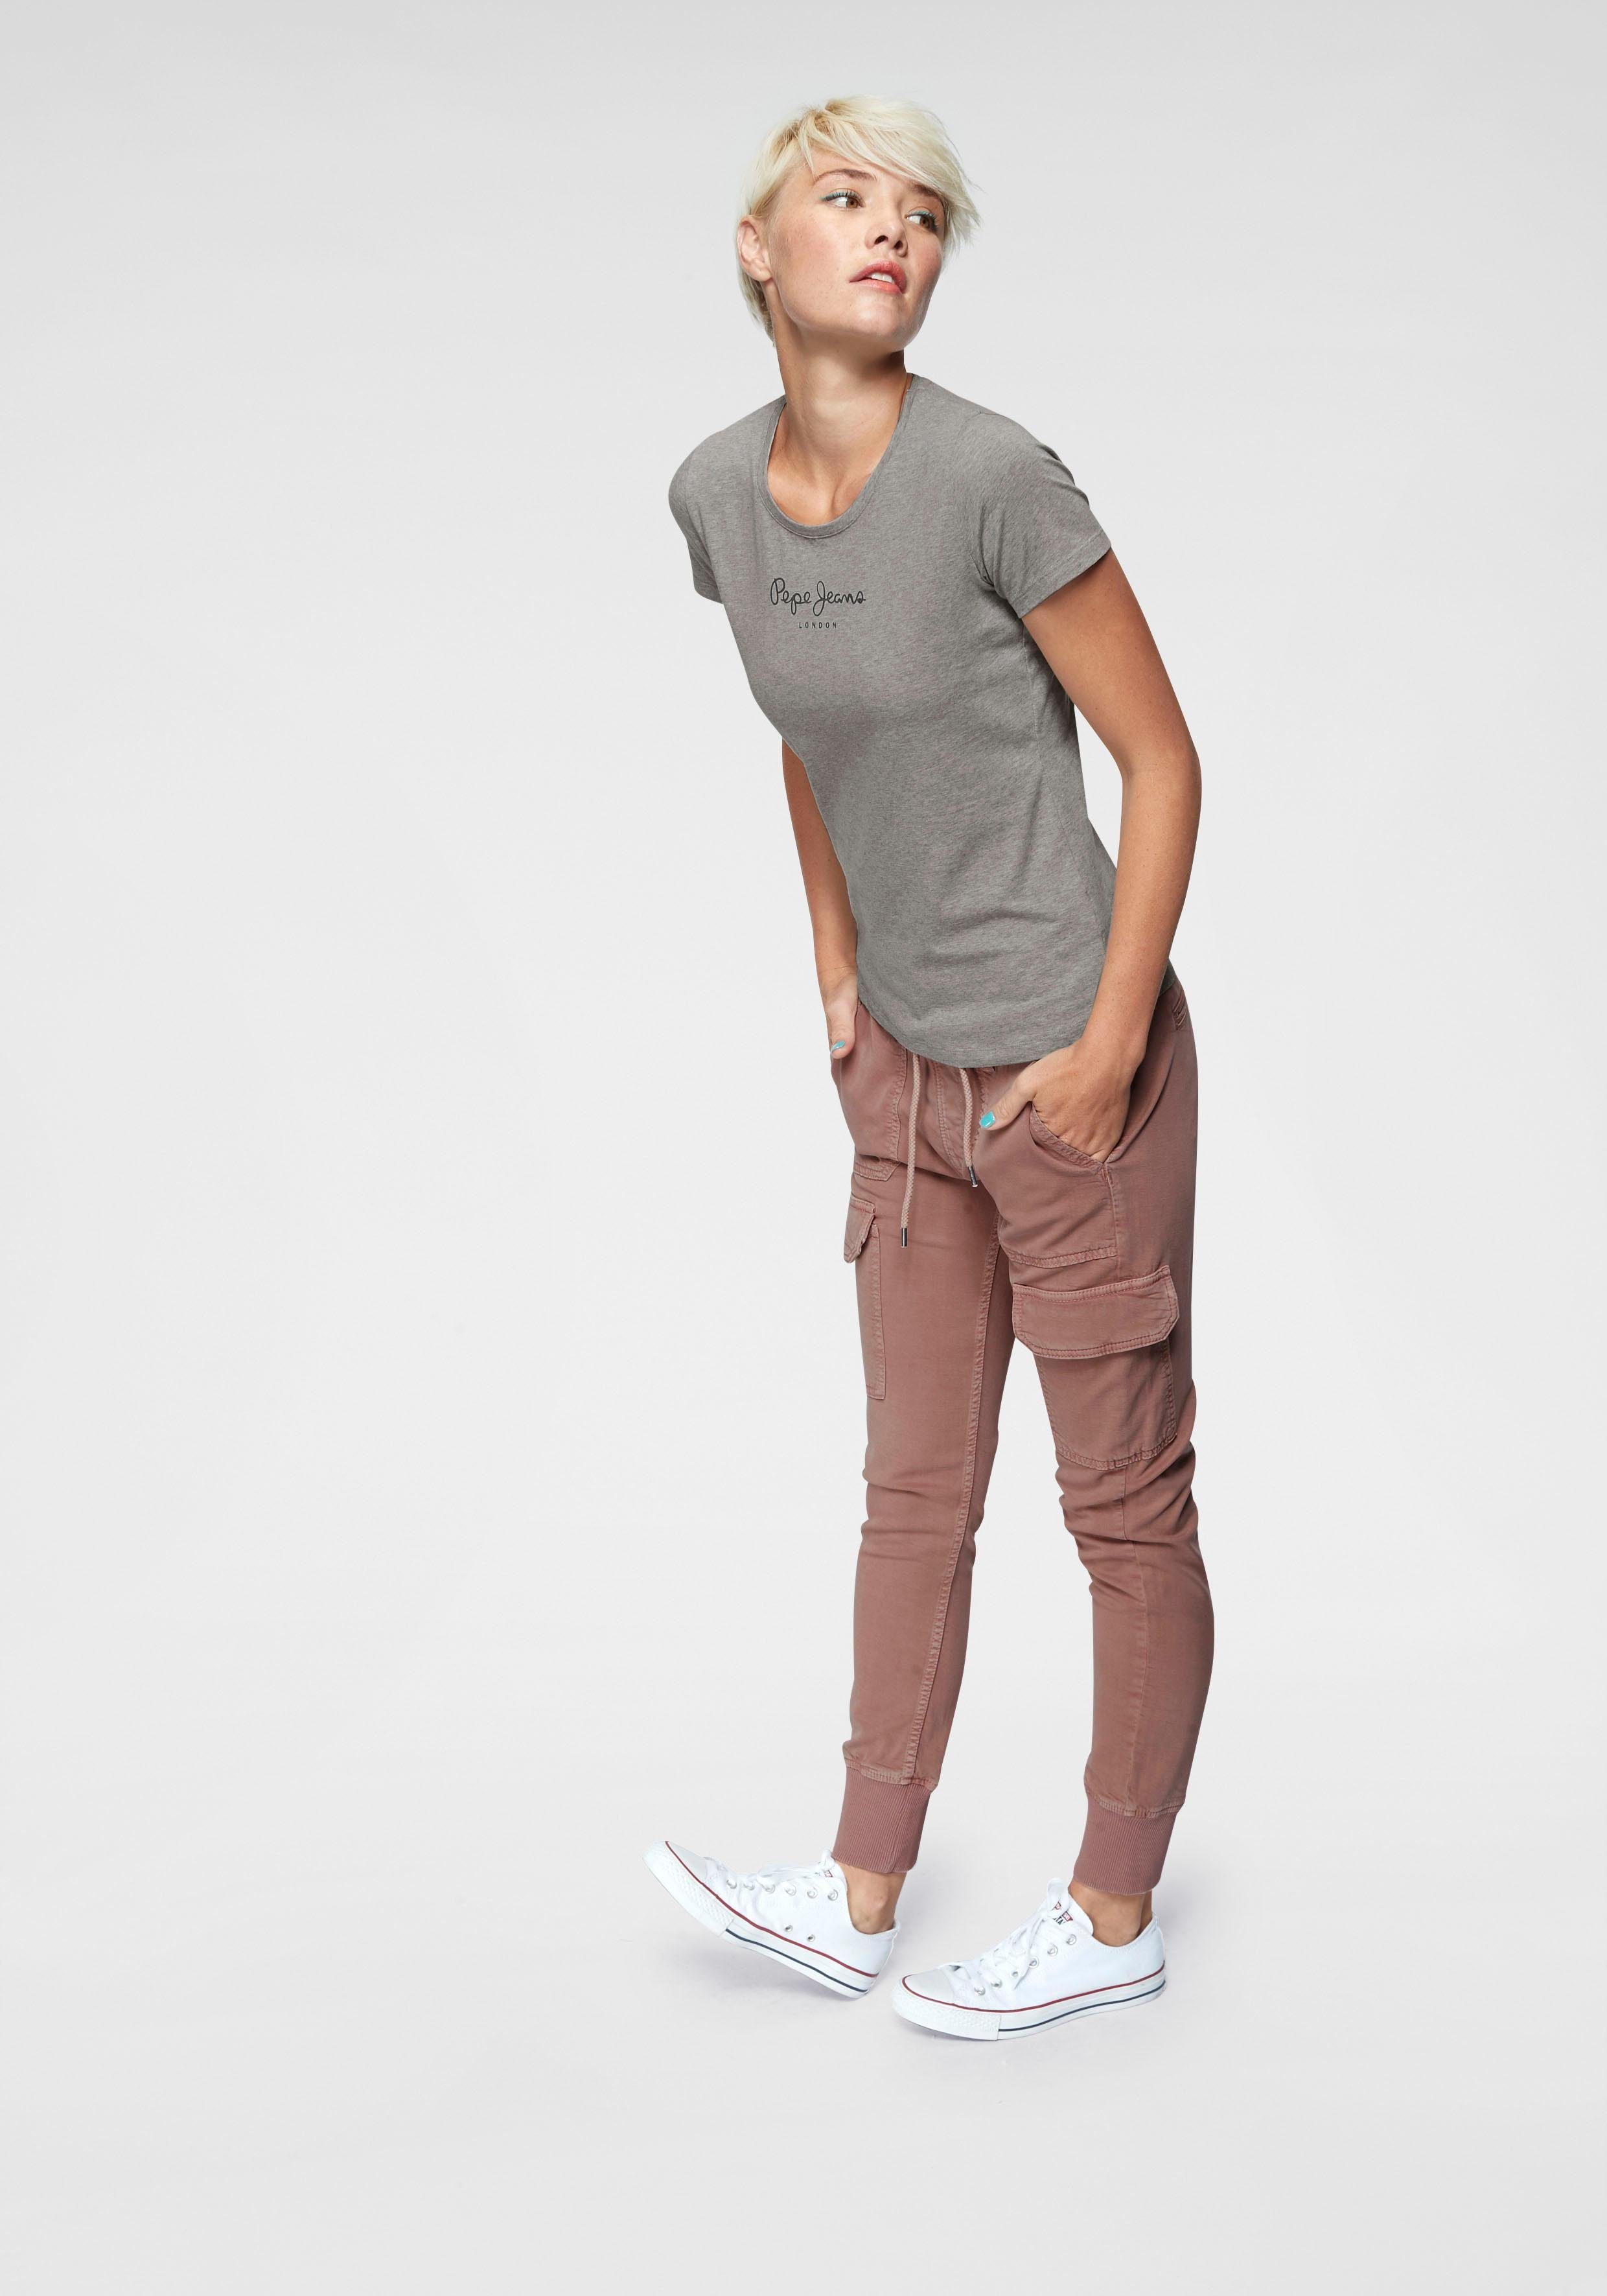 T-Shirt NEW Jeans marl mit 933 grey VIRGINIA Pepe Logo-Print